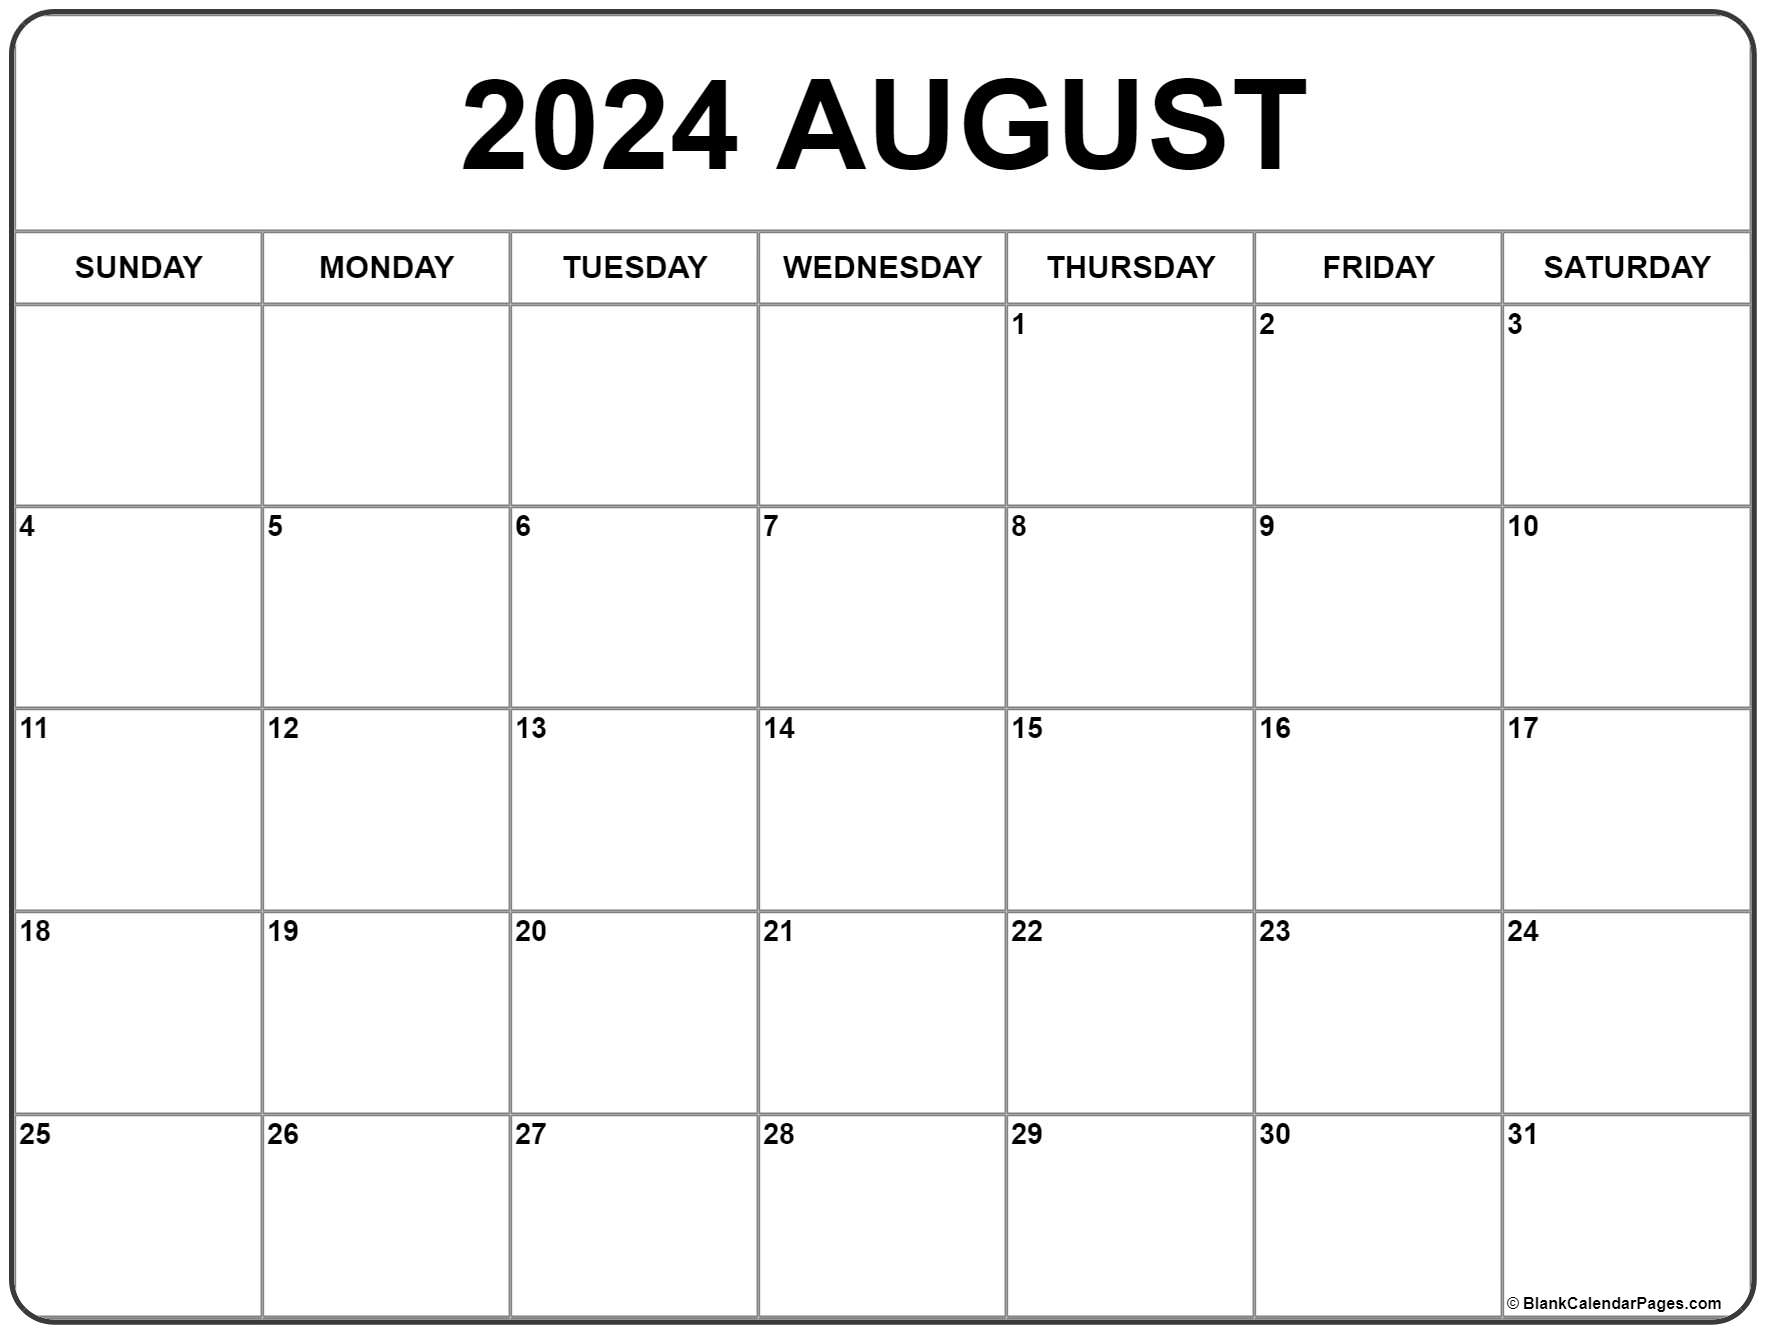 August 2024 Calendar Free Printable Calendar - Free Printable 2024 July And August Calendar